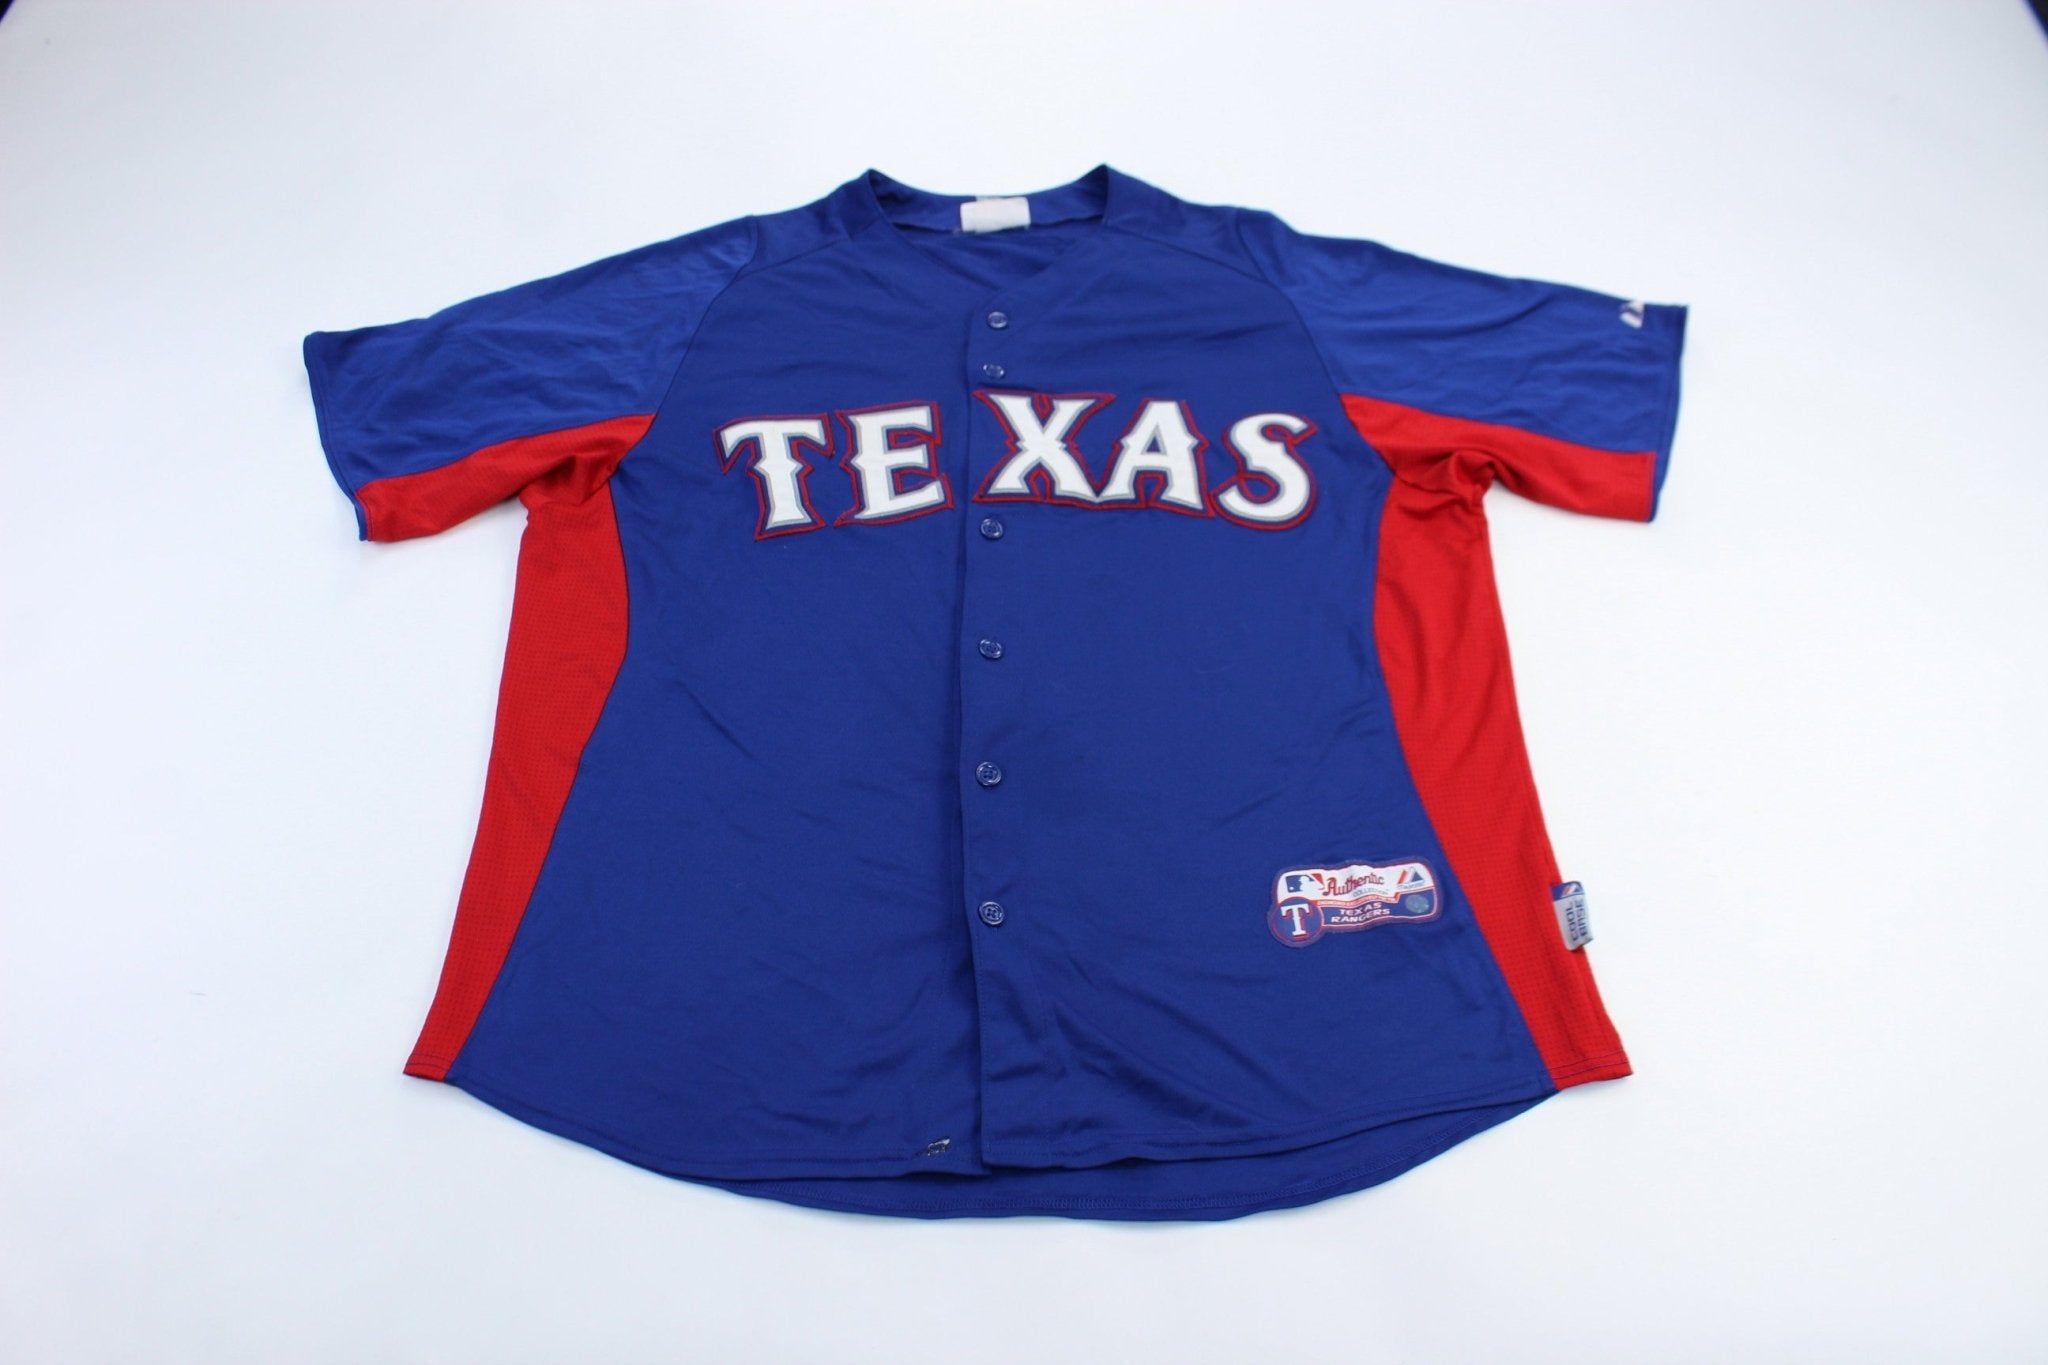 texas rangers baseball uniforms